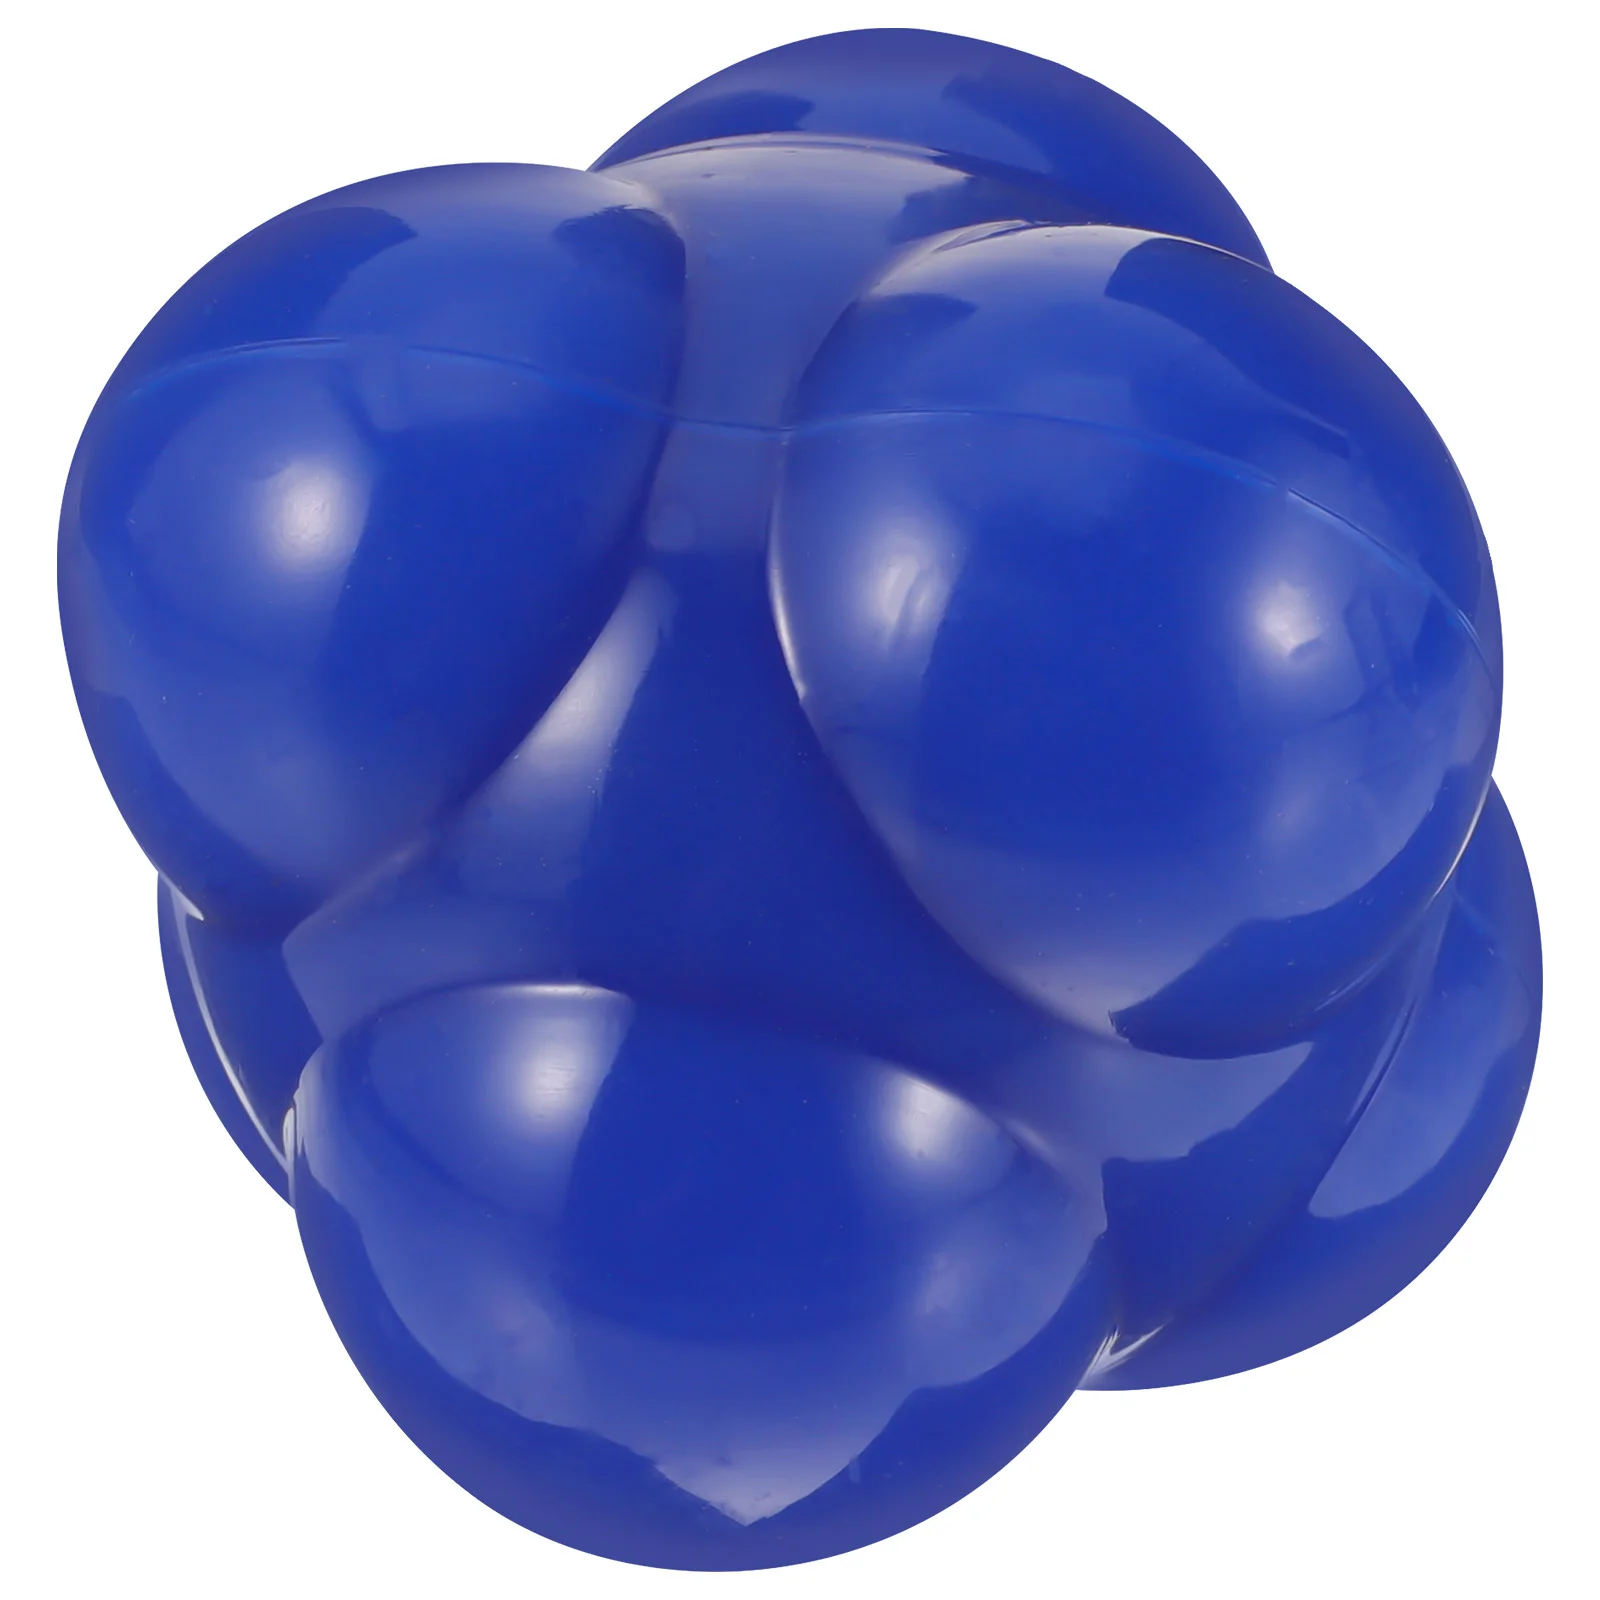 

Agility Ball Silicone Reaction Ball Agile Training Equipment Ball Hexagonal Ball for Baseball Training